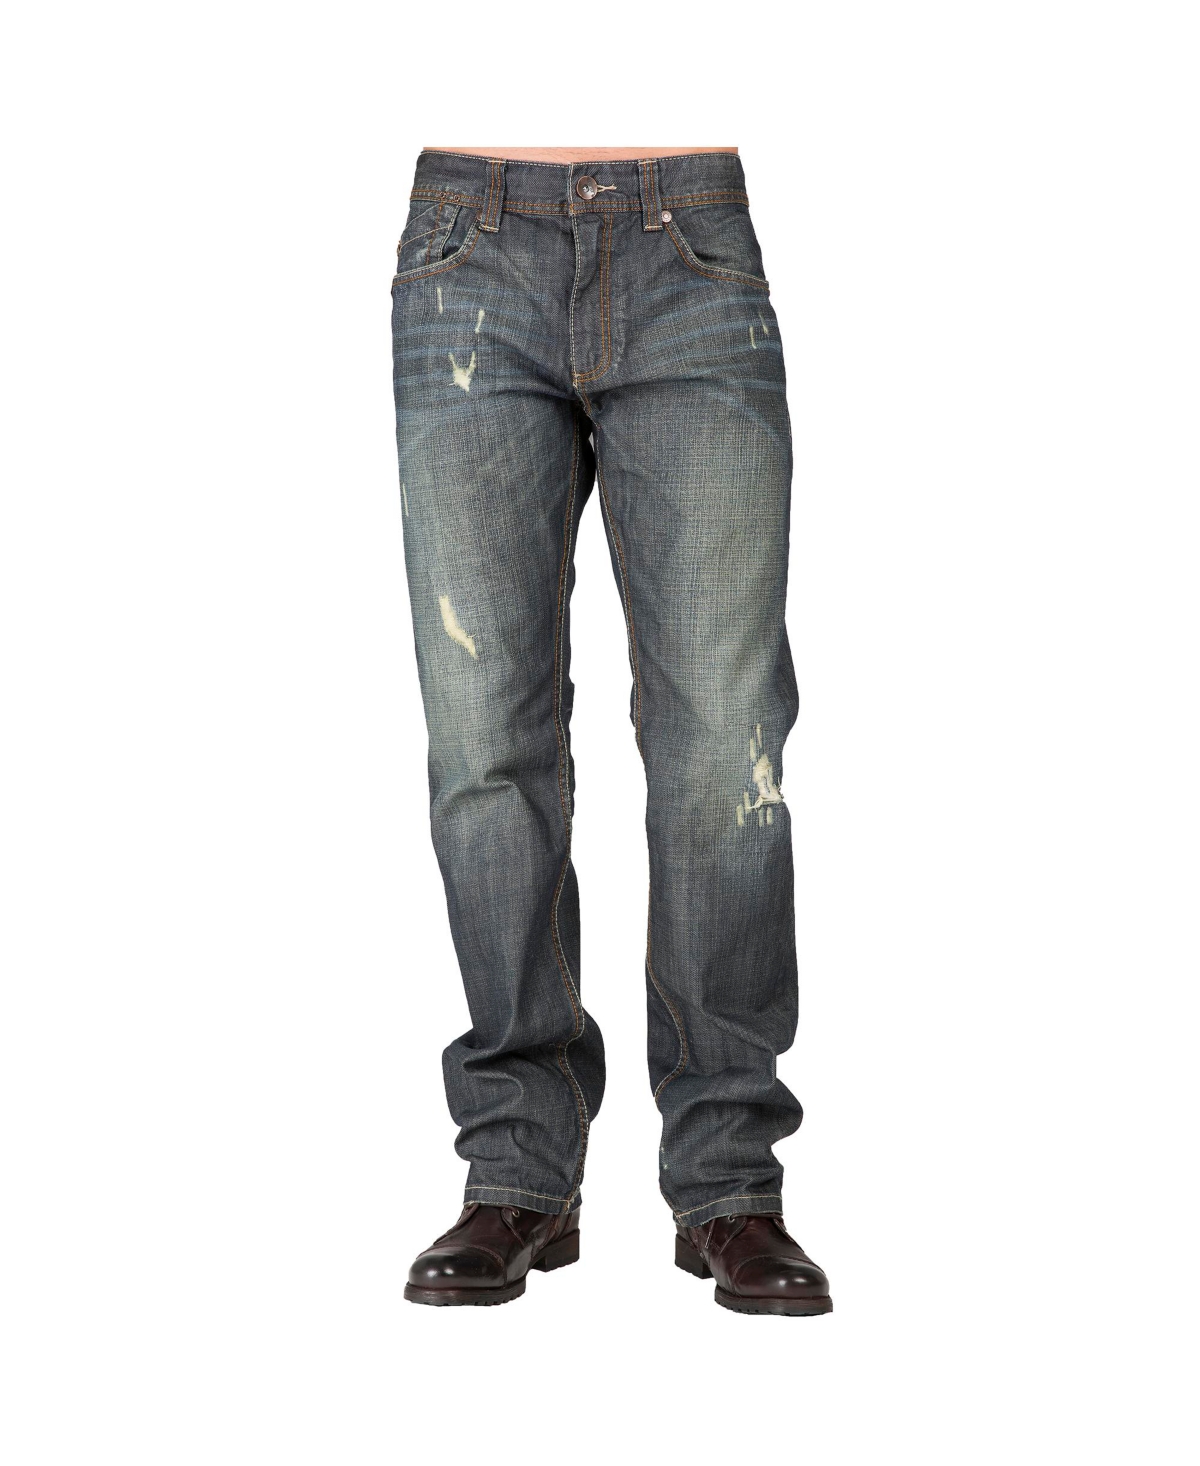 Men's Relaxed Straight Distressed Vintage like Tint & Whisker Denim Jeans - Dark blue